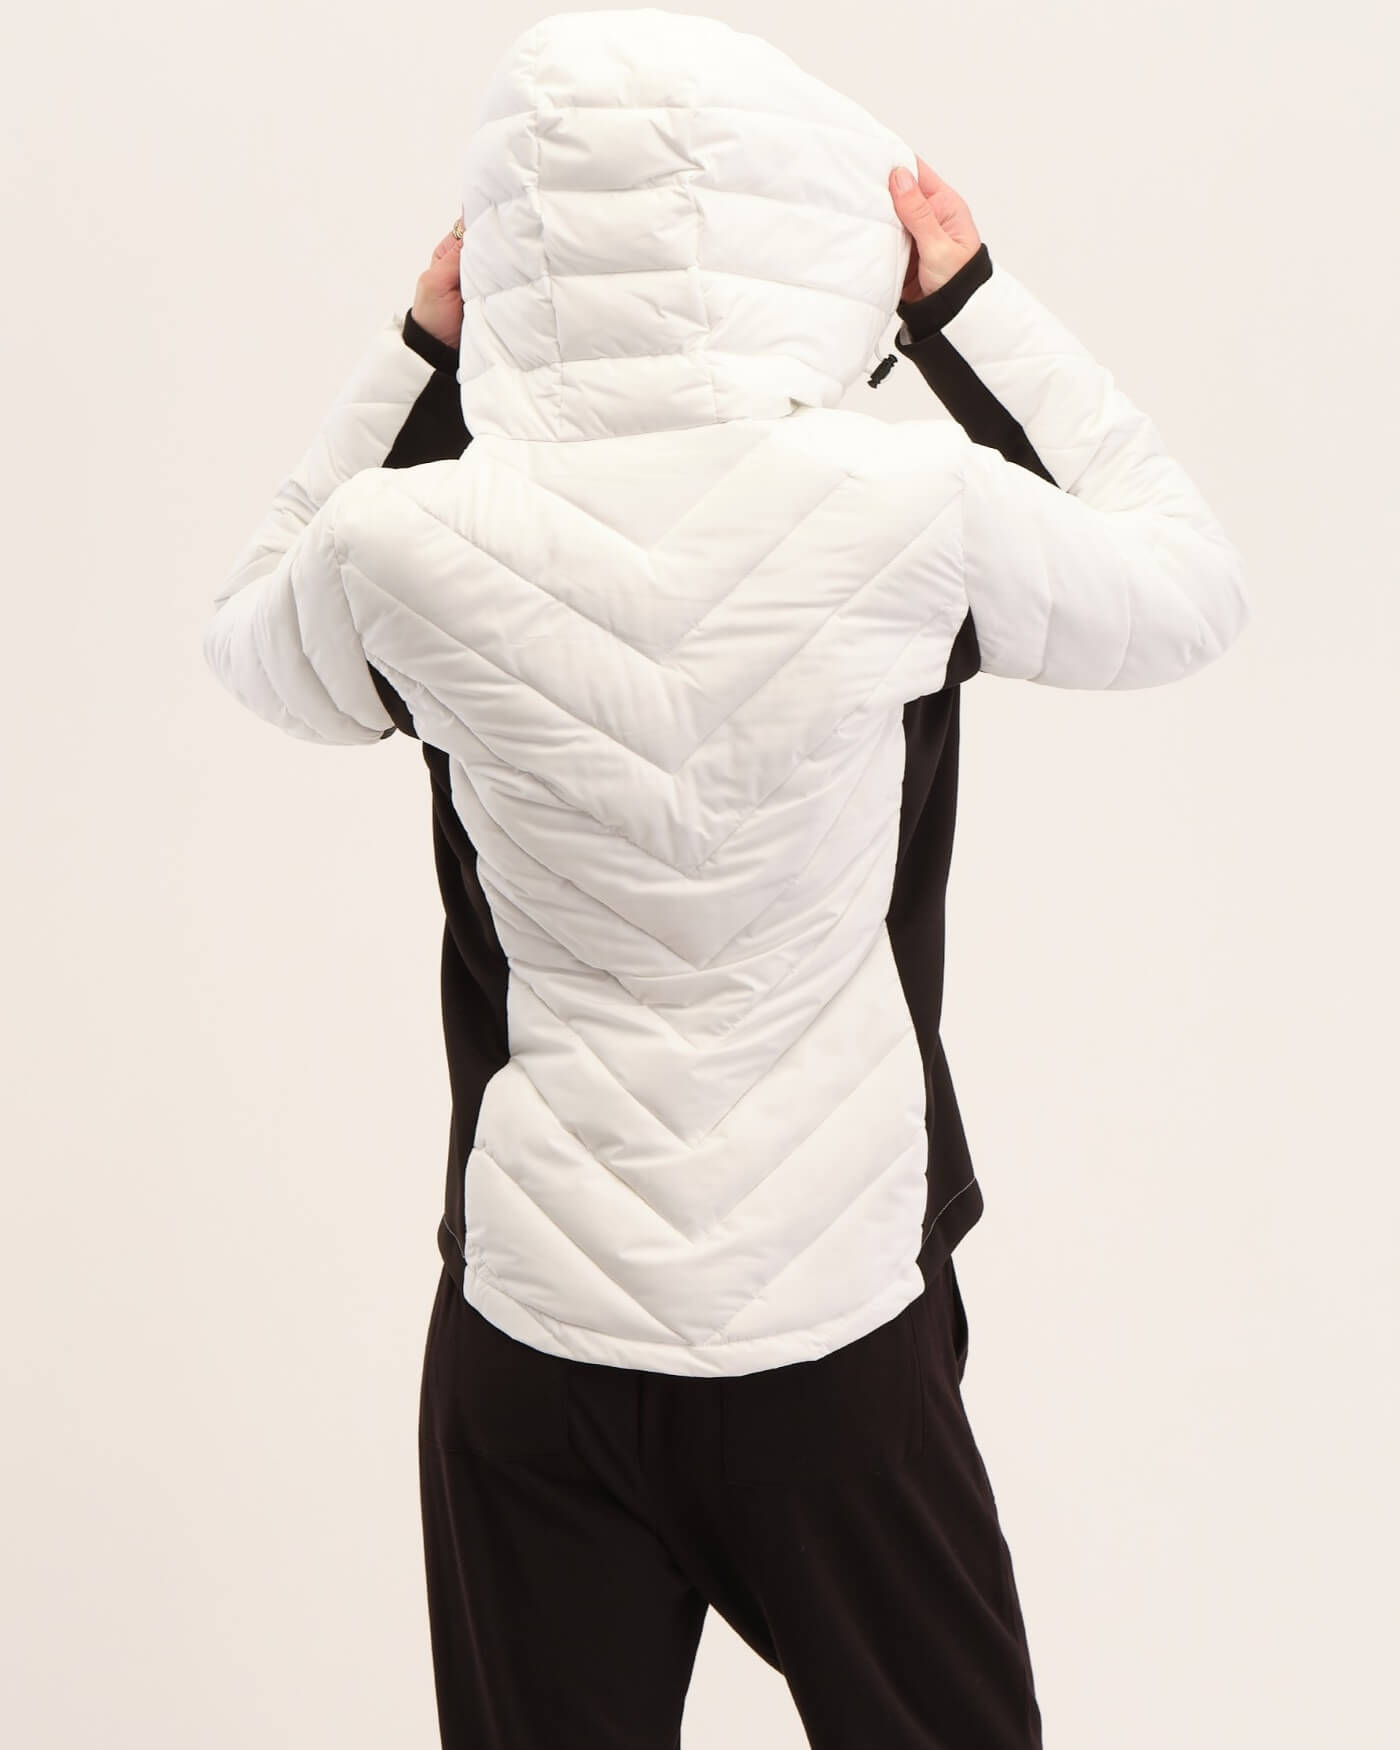 Shop Quilted Zip Front Hooded Jacket | Elie Elie Tahari | JANE + MERCER